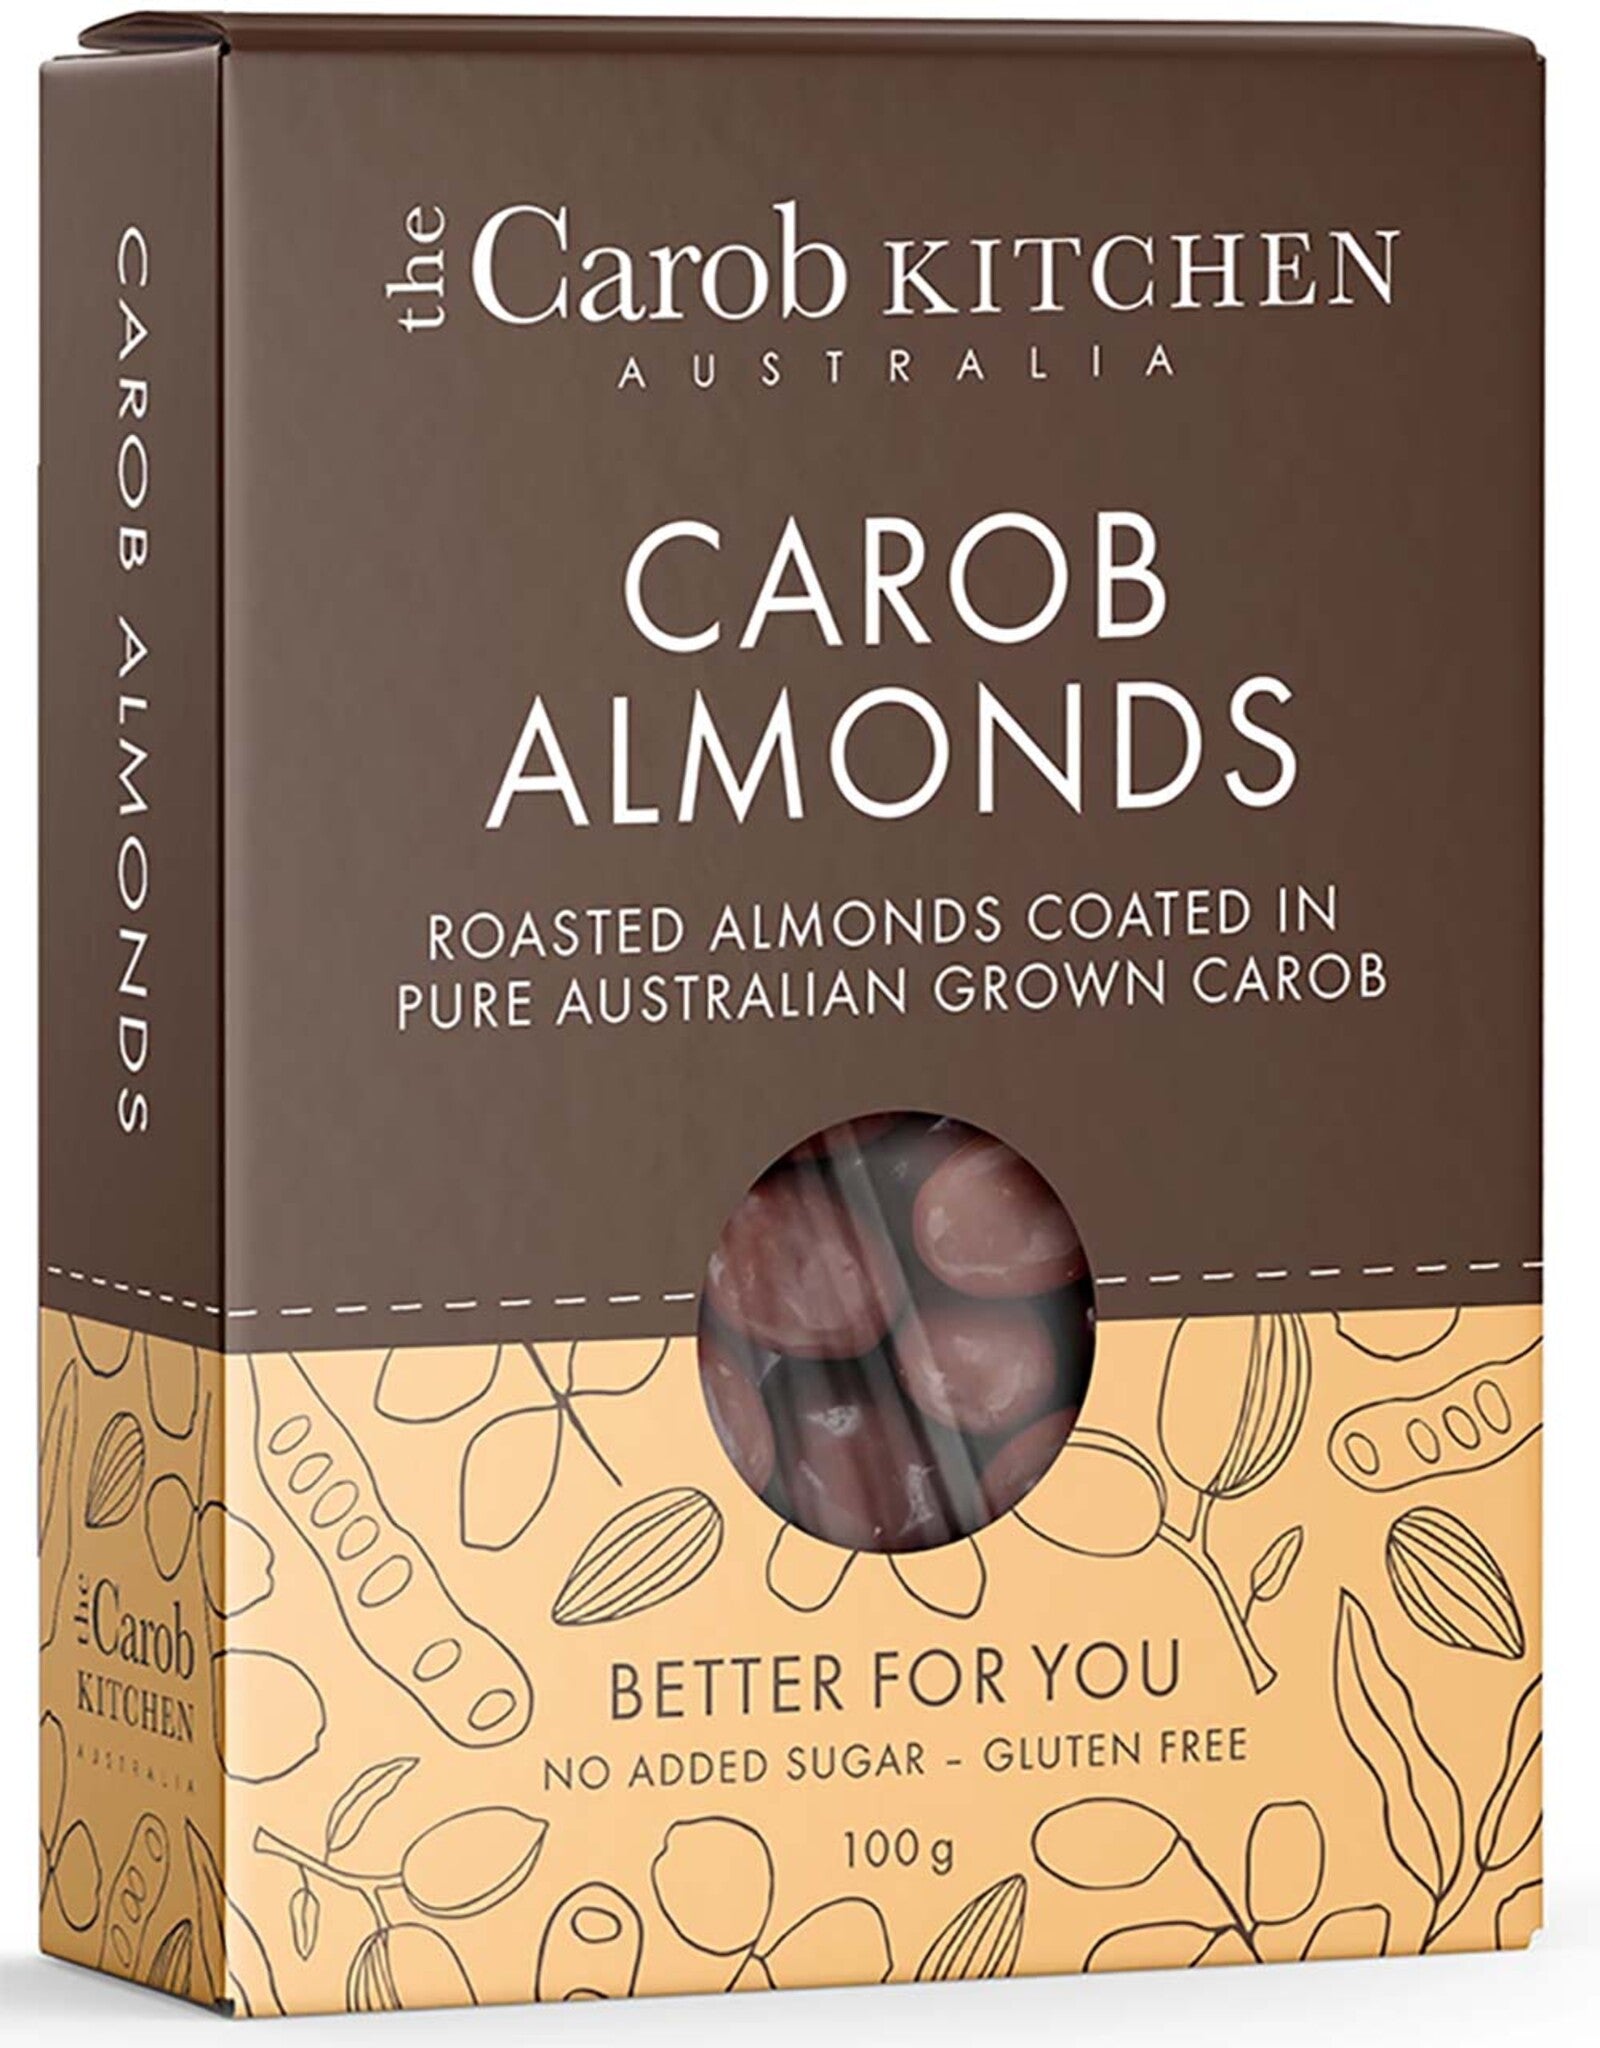 Carob Almonds 100g The Carob Kitchen